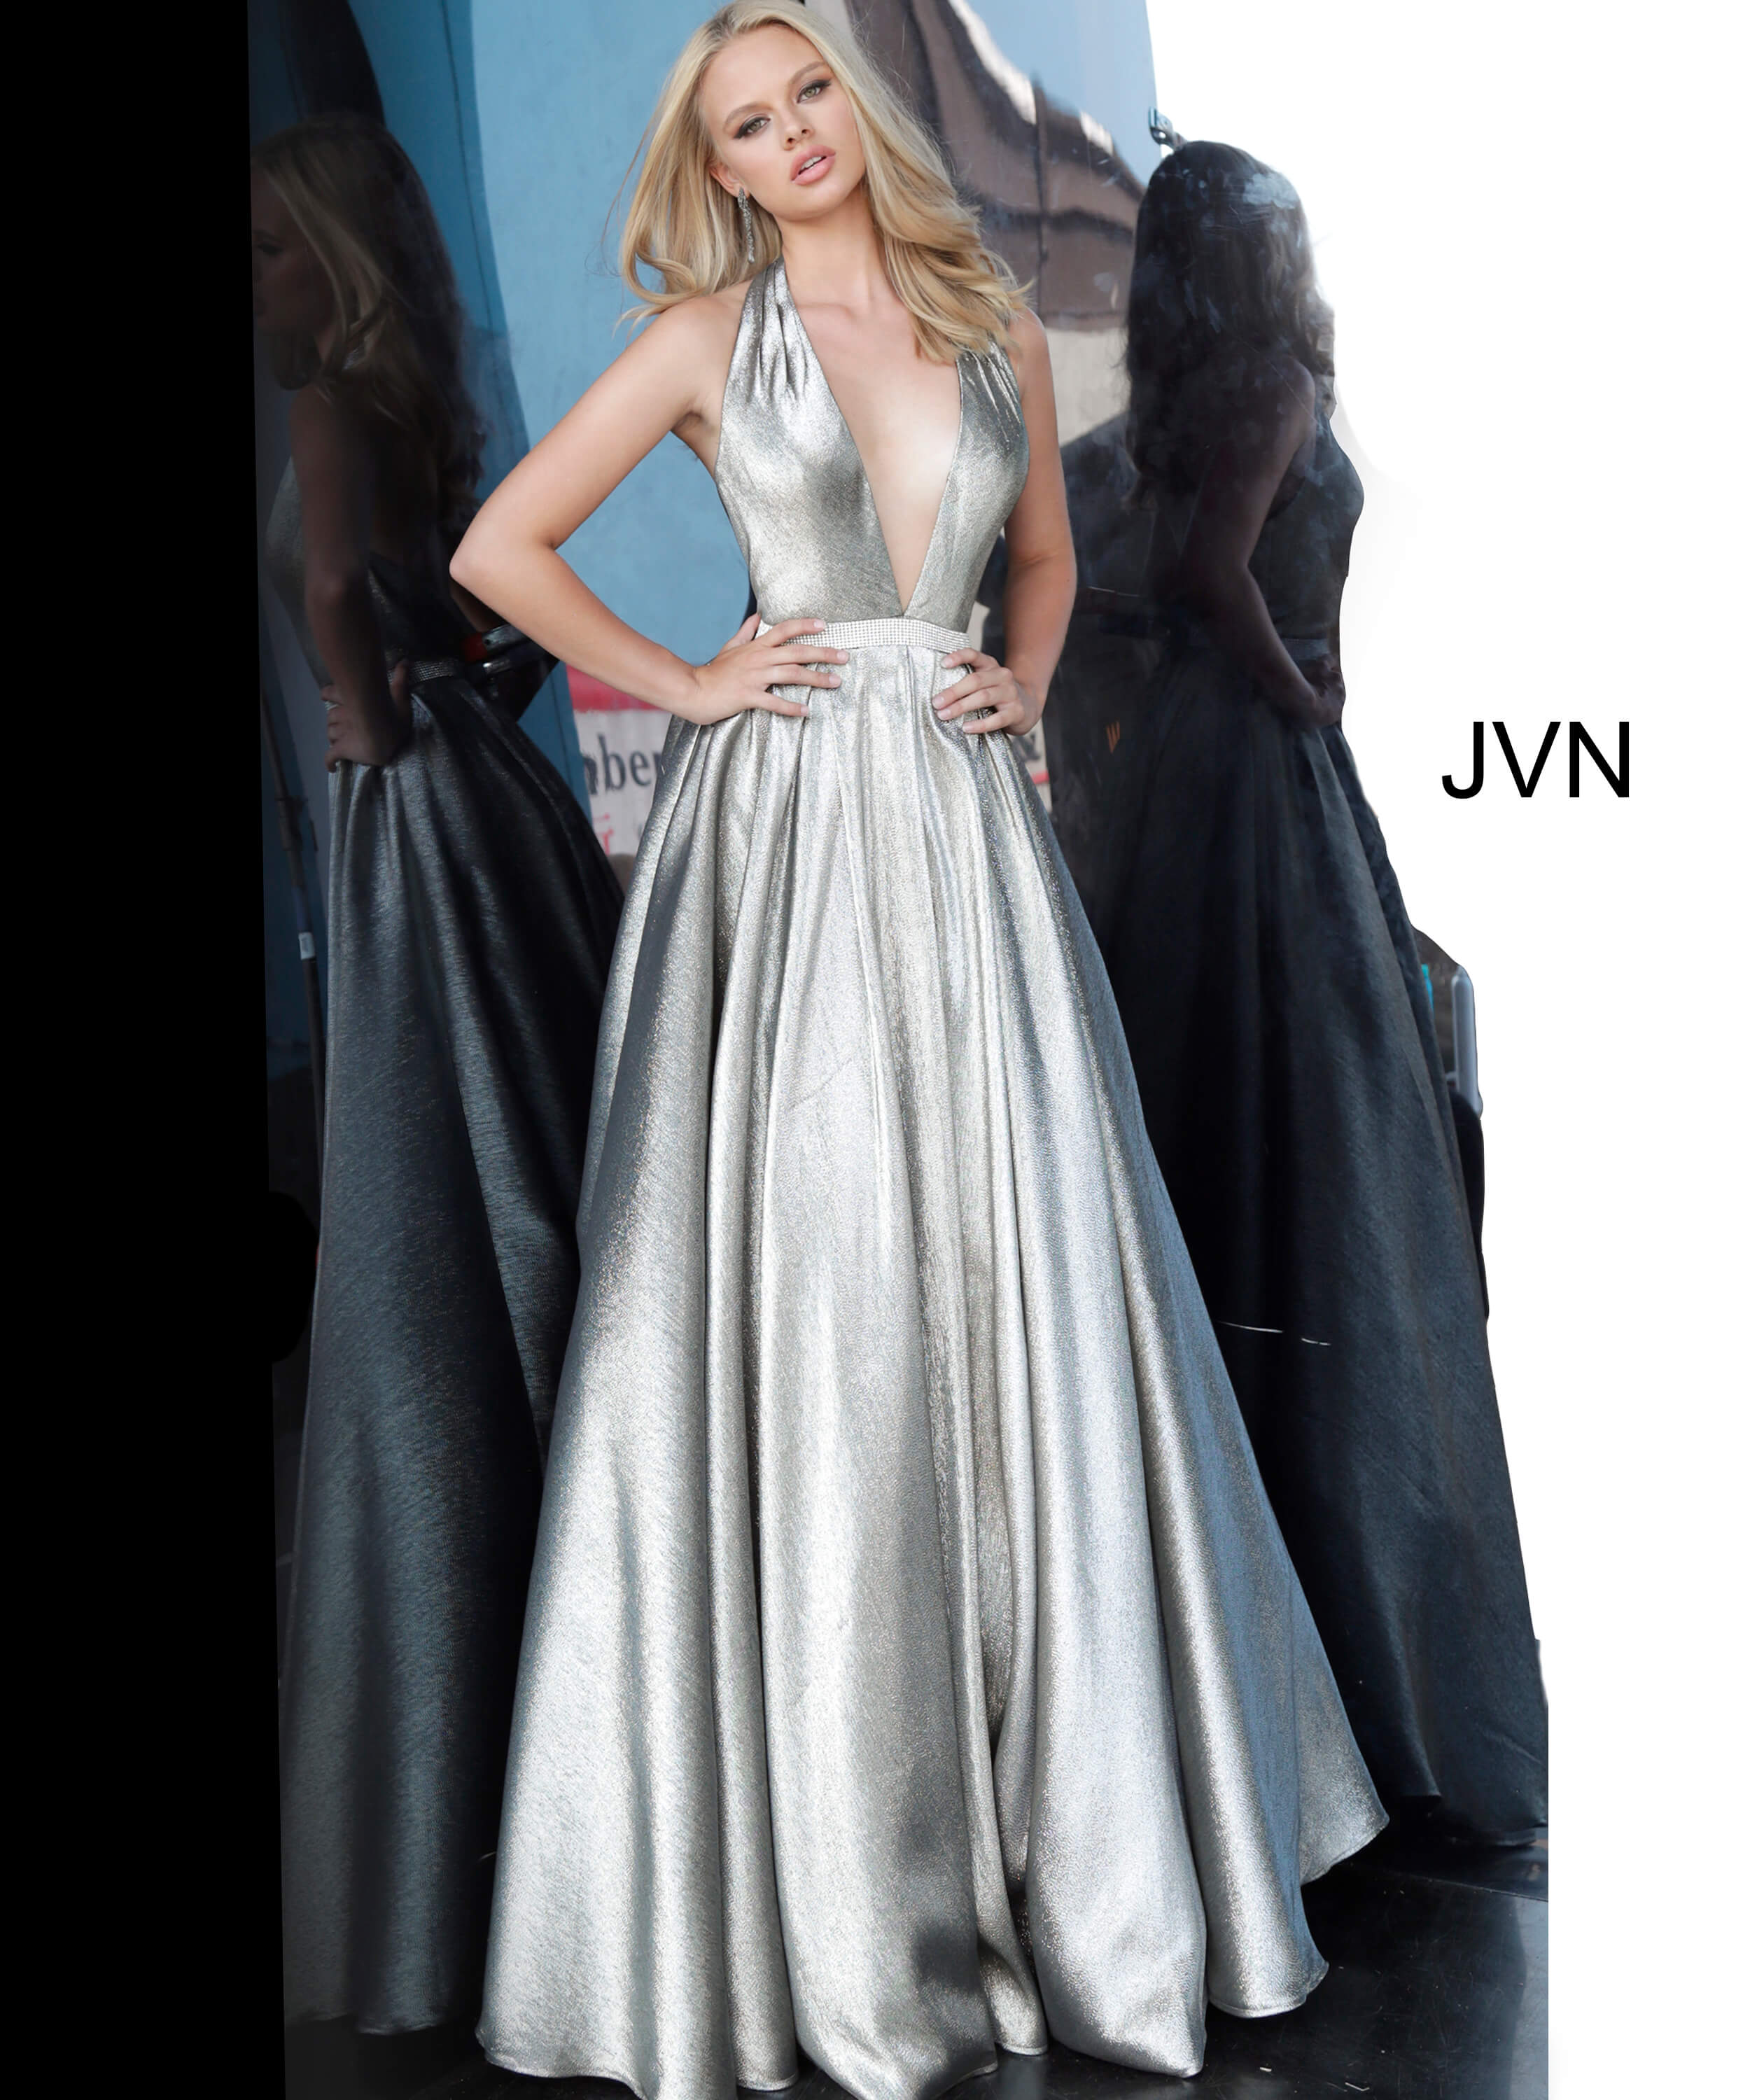 silver dress